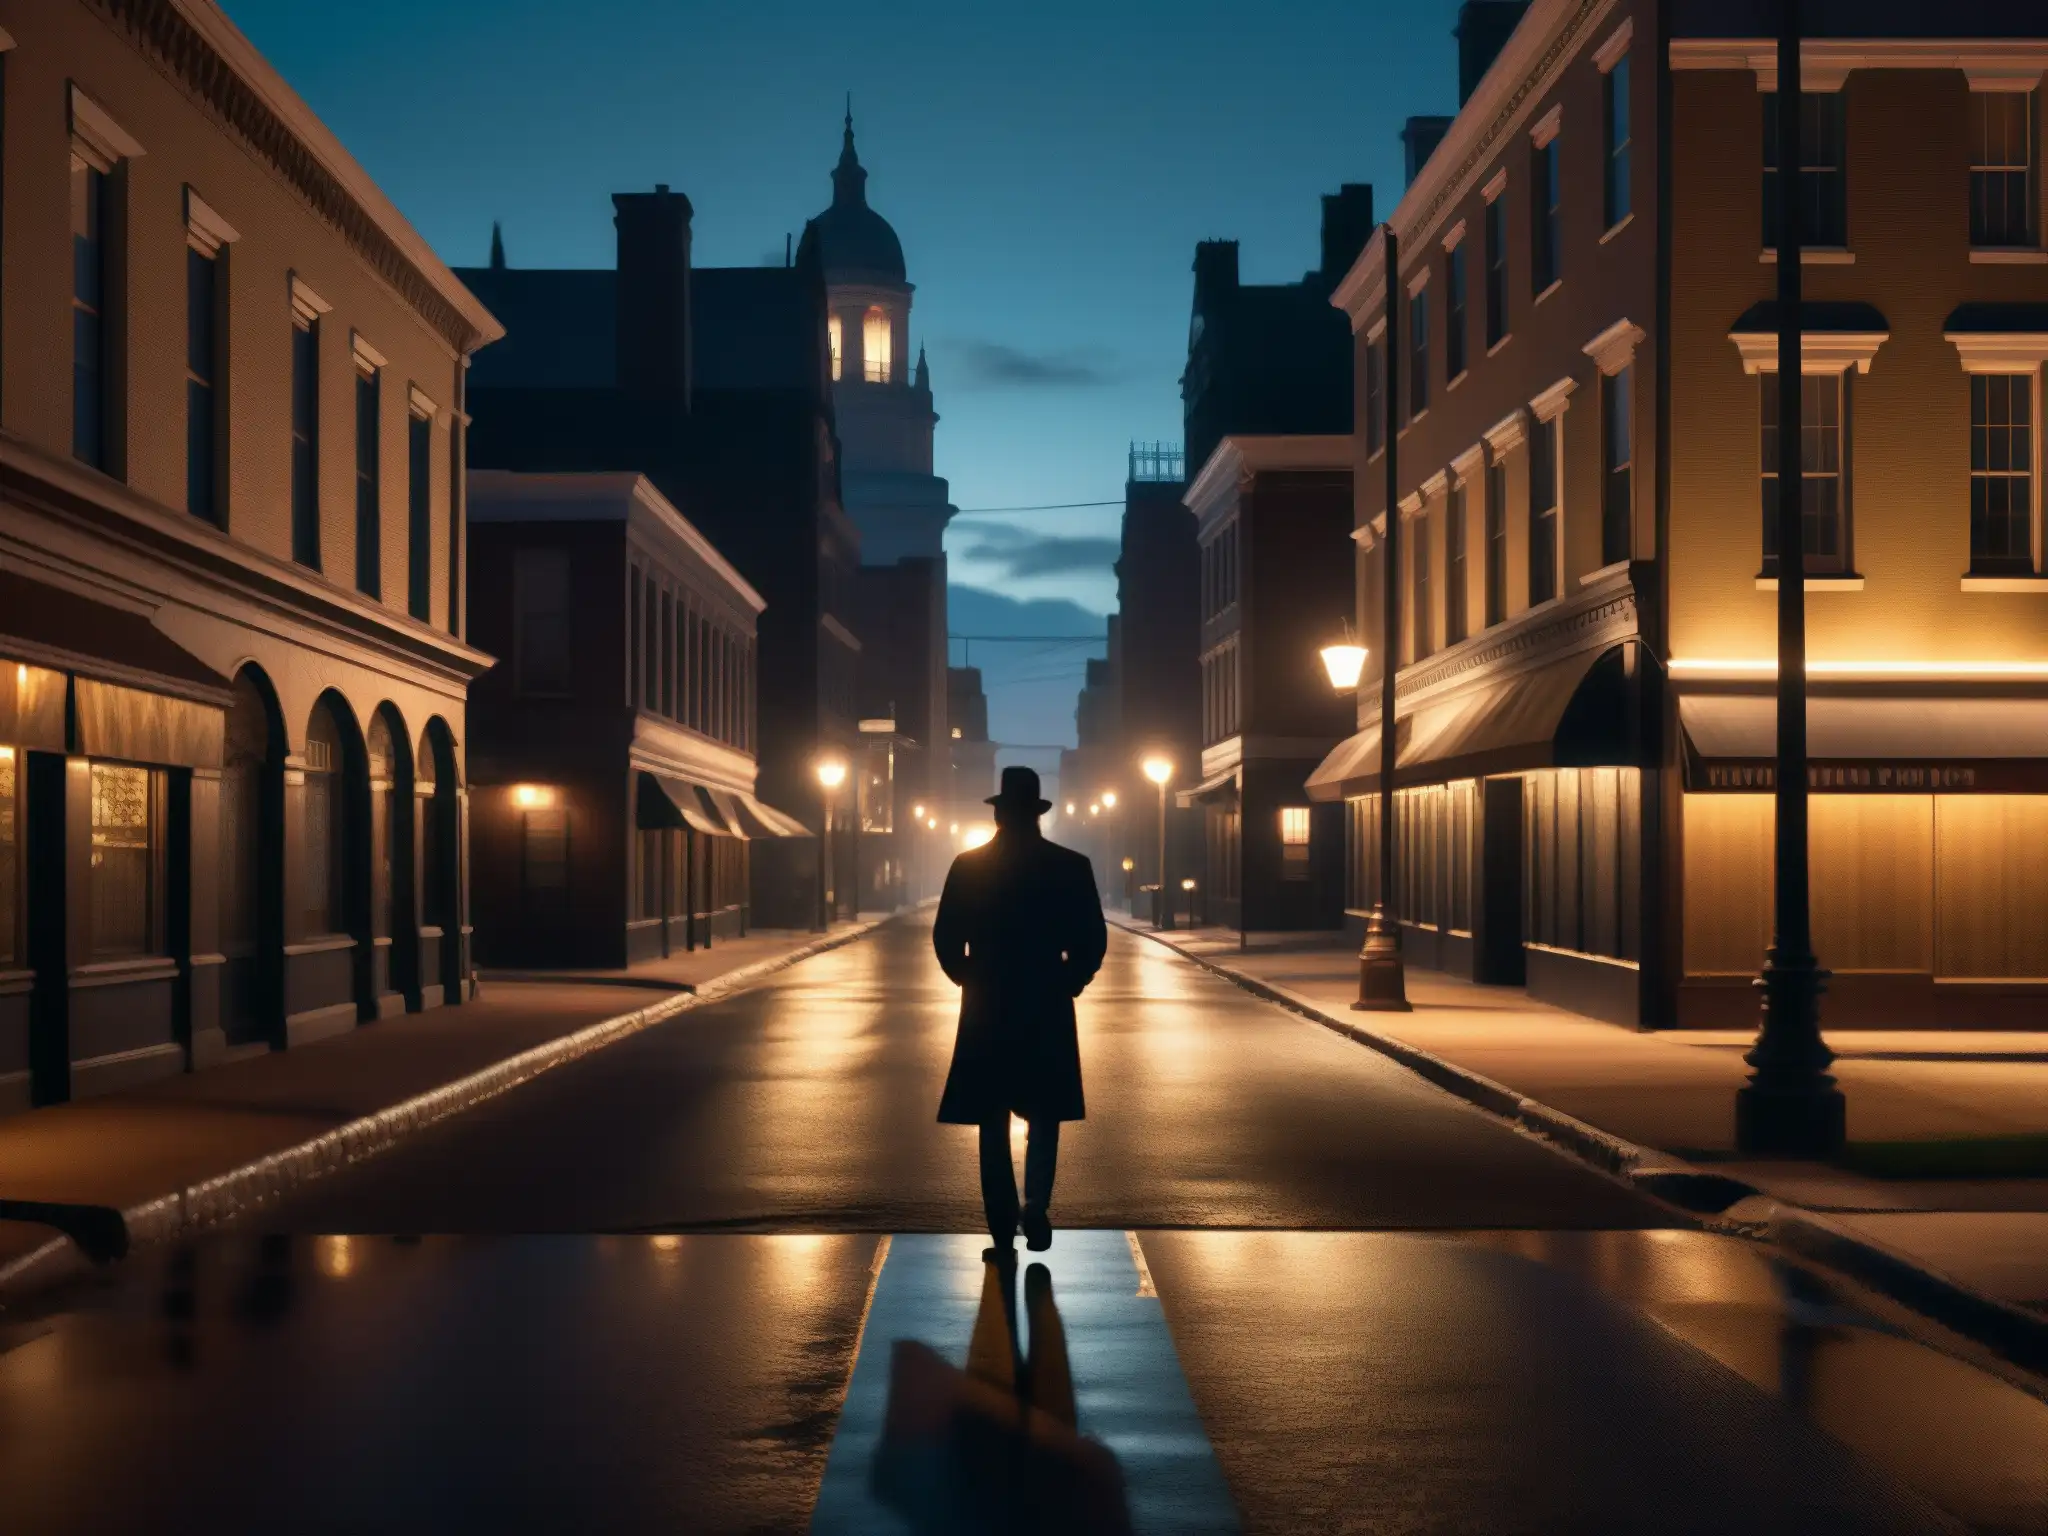 Silueta misteriosa camina en calle nocturna, entre sombras y luces, evocando necesidad enigma leyendas urbanas